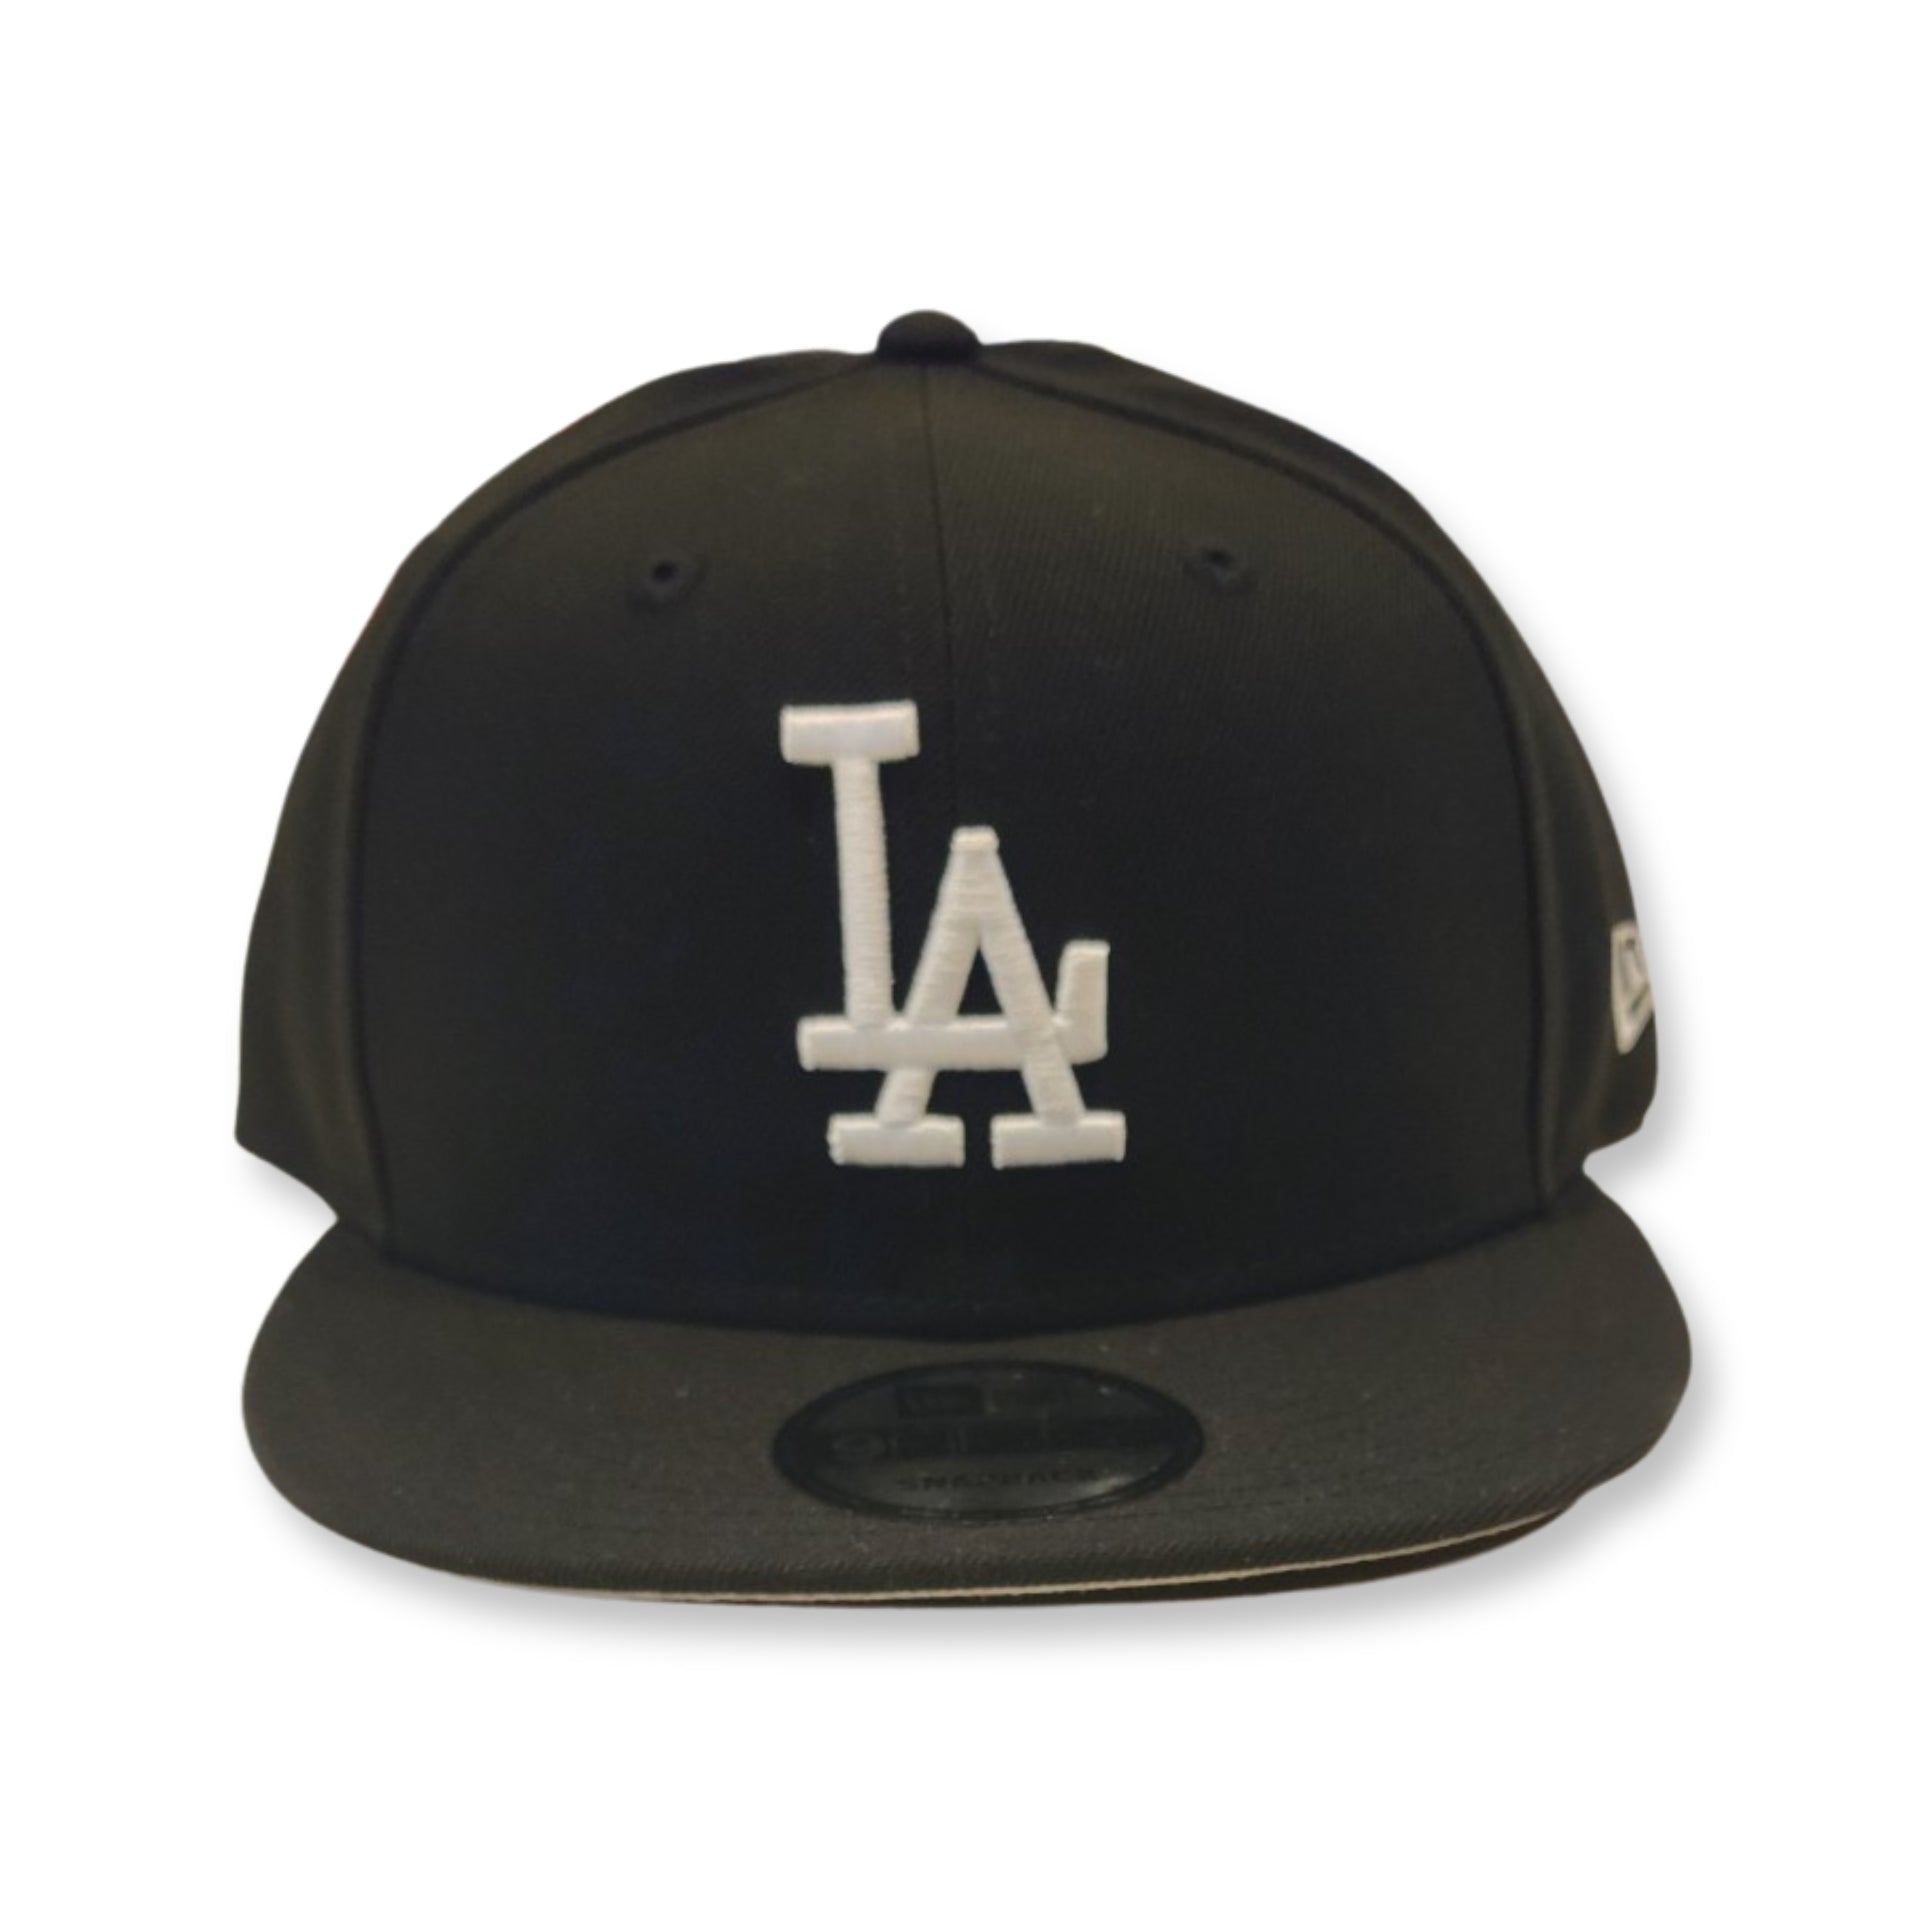 New Era 9fifty LA Dodgers hat Snapback Black